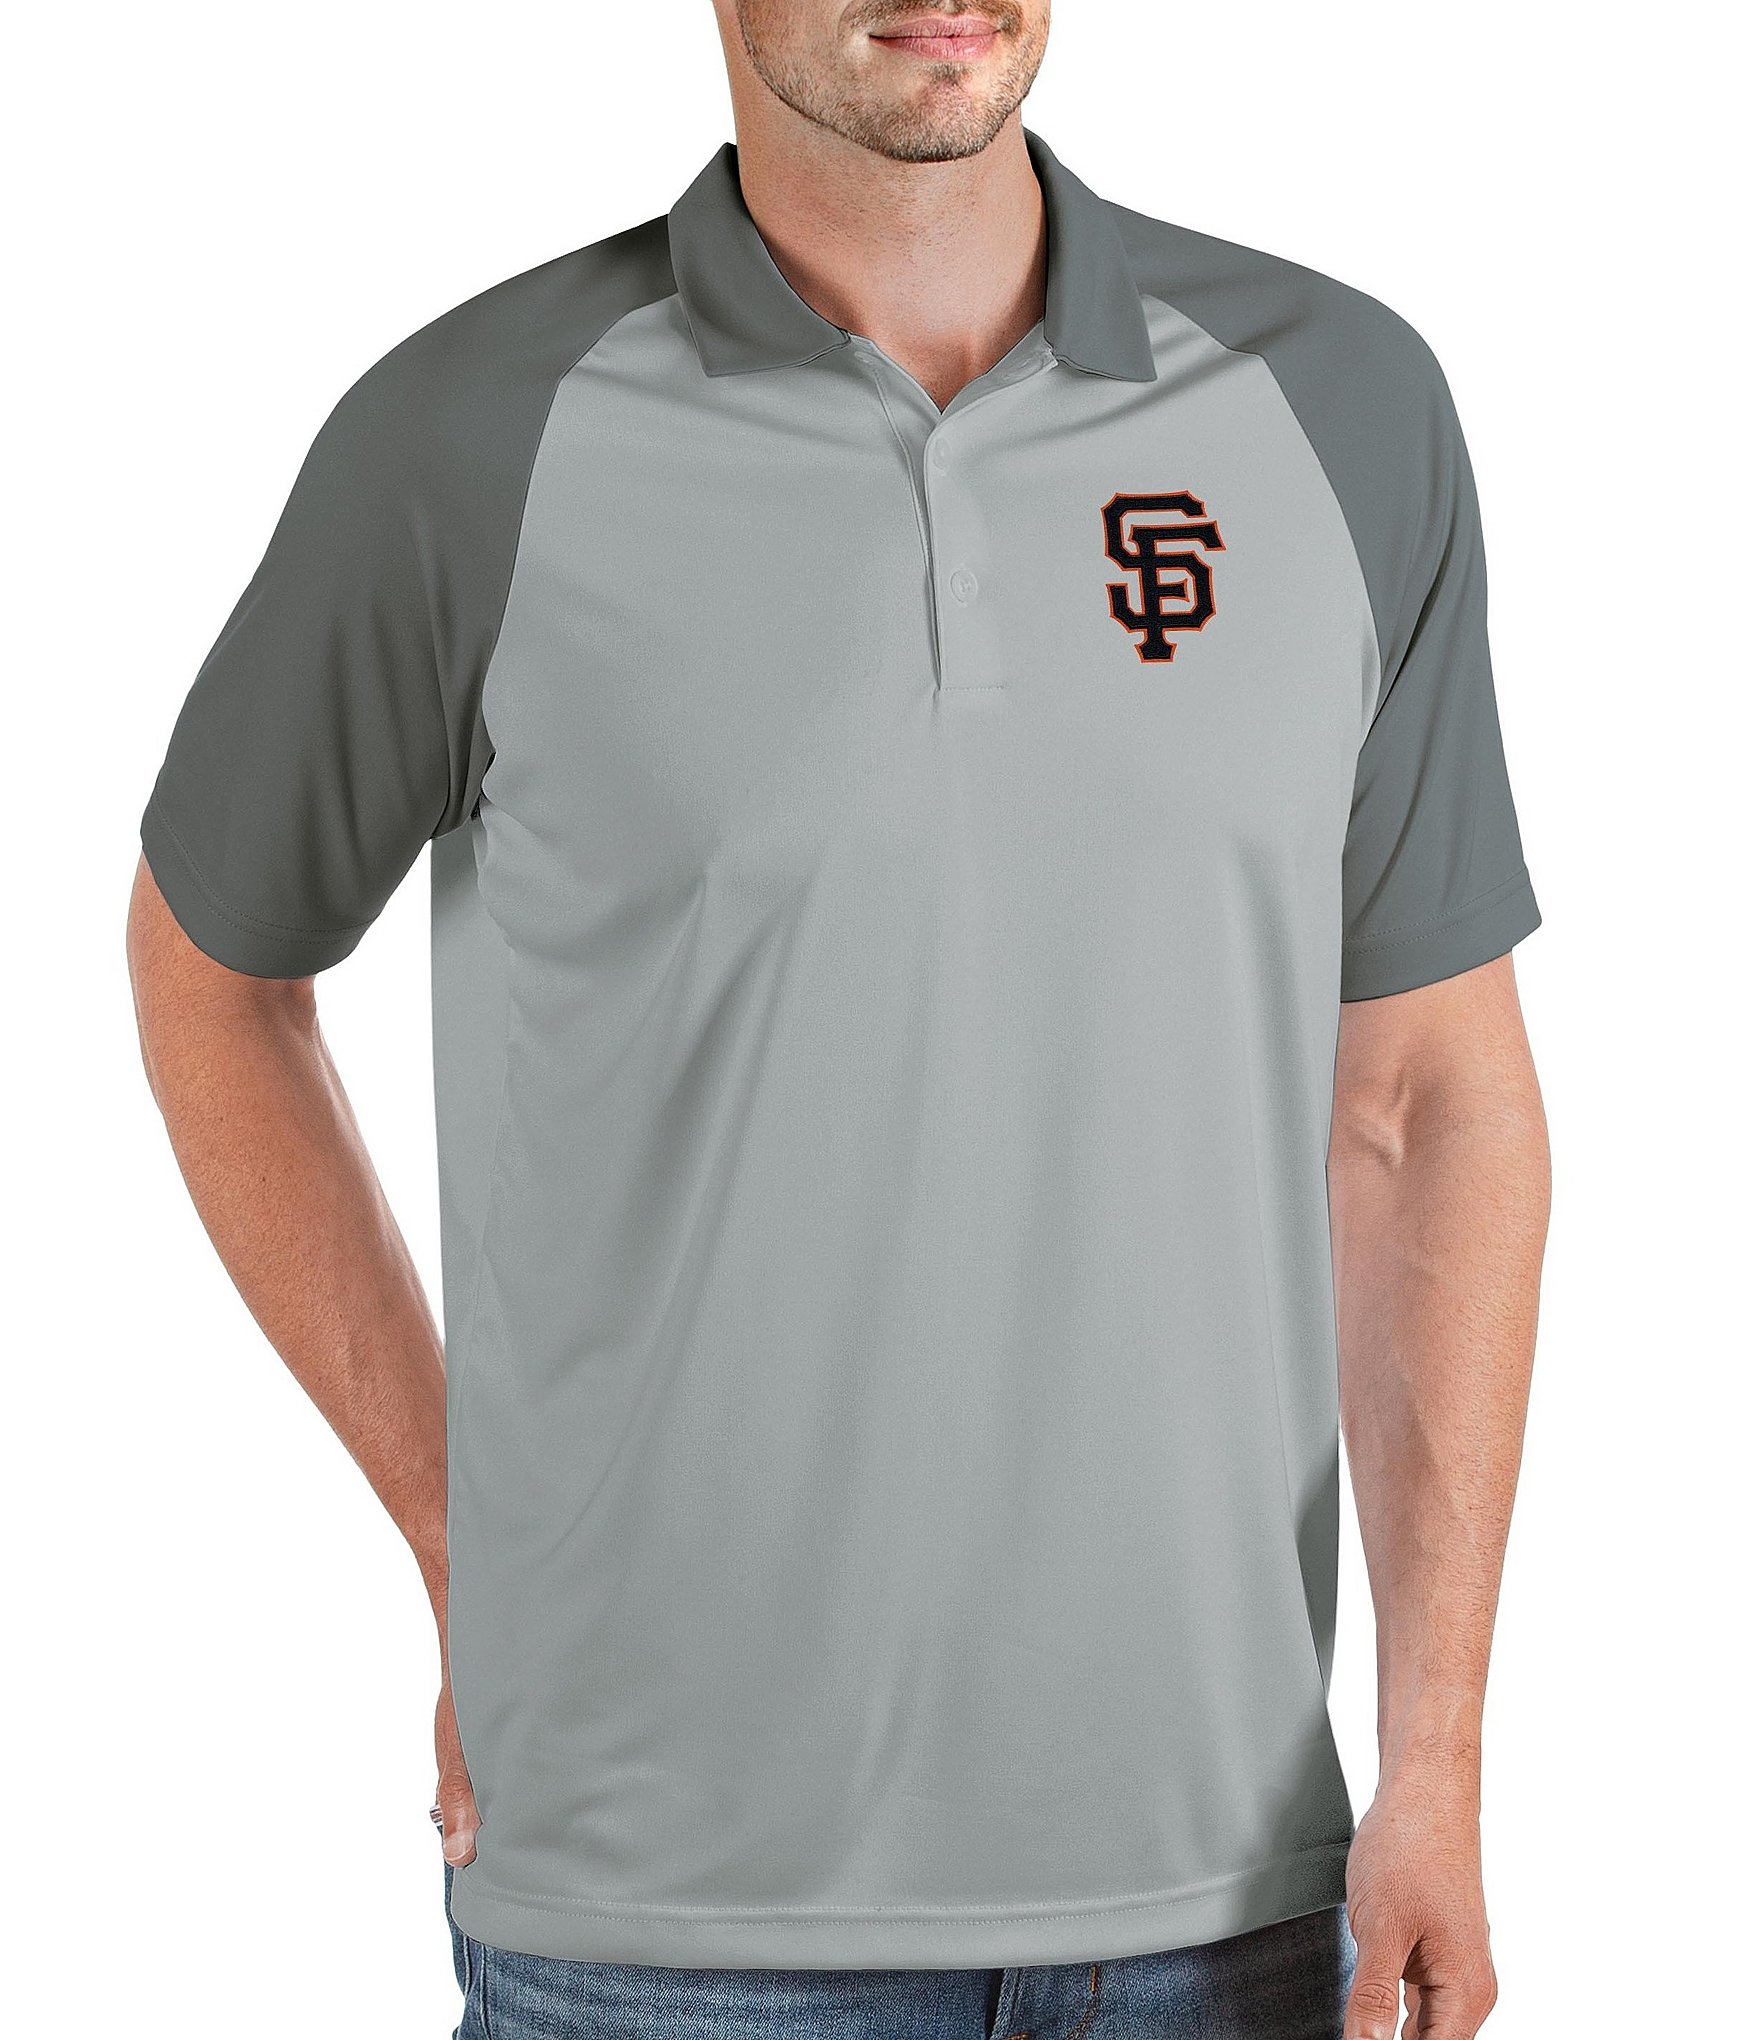 Antigua MLB Chicago White Sox Nova Short-Sleeve Colorblock Polo Shirt - L